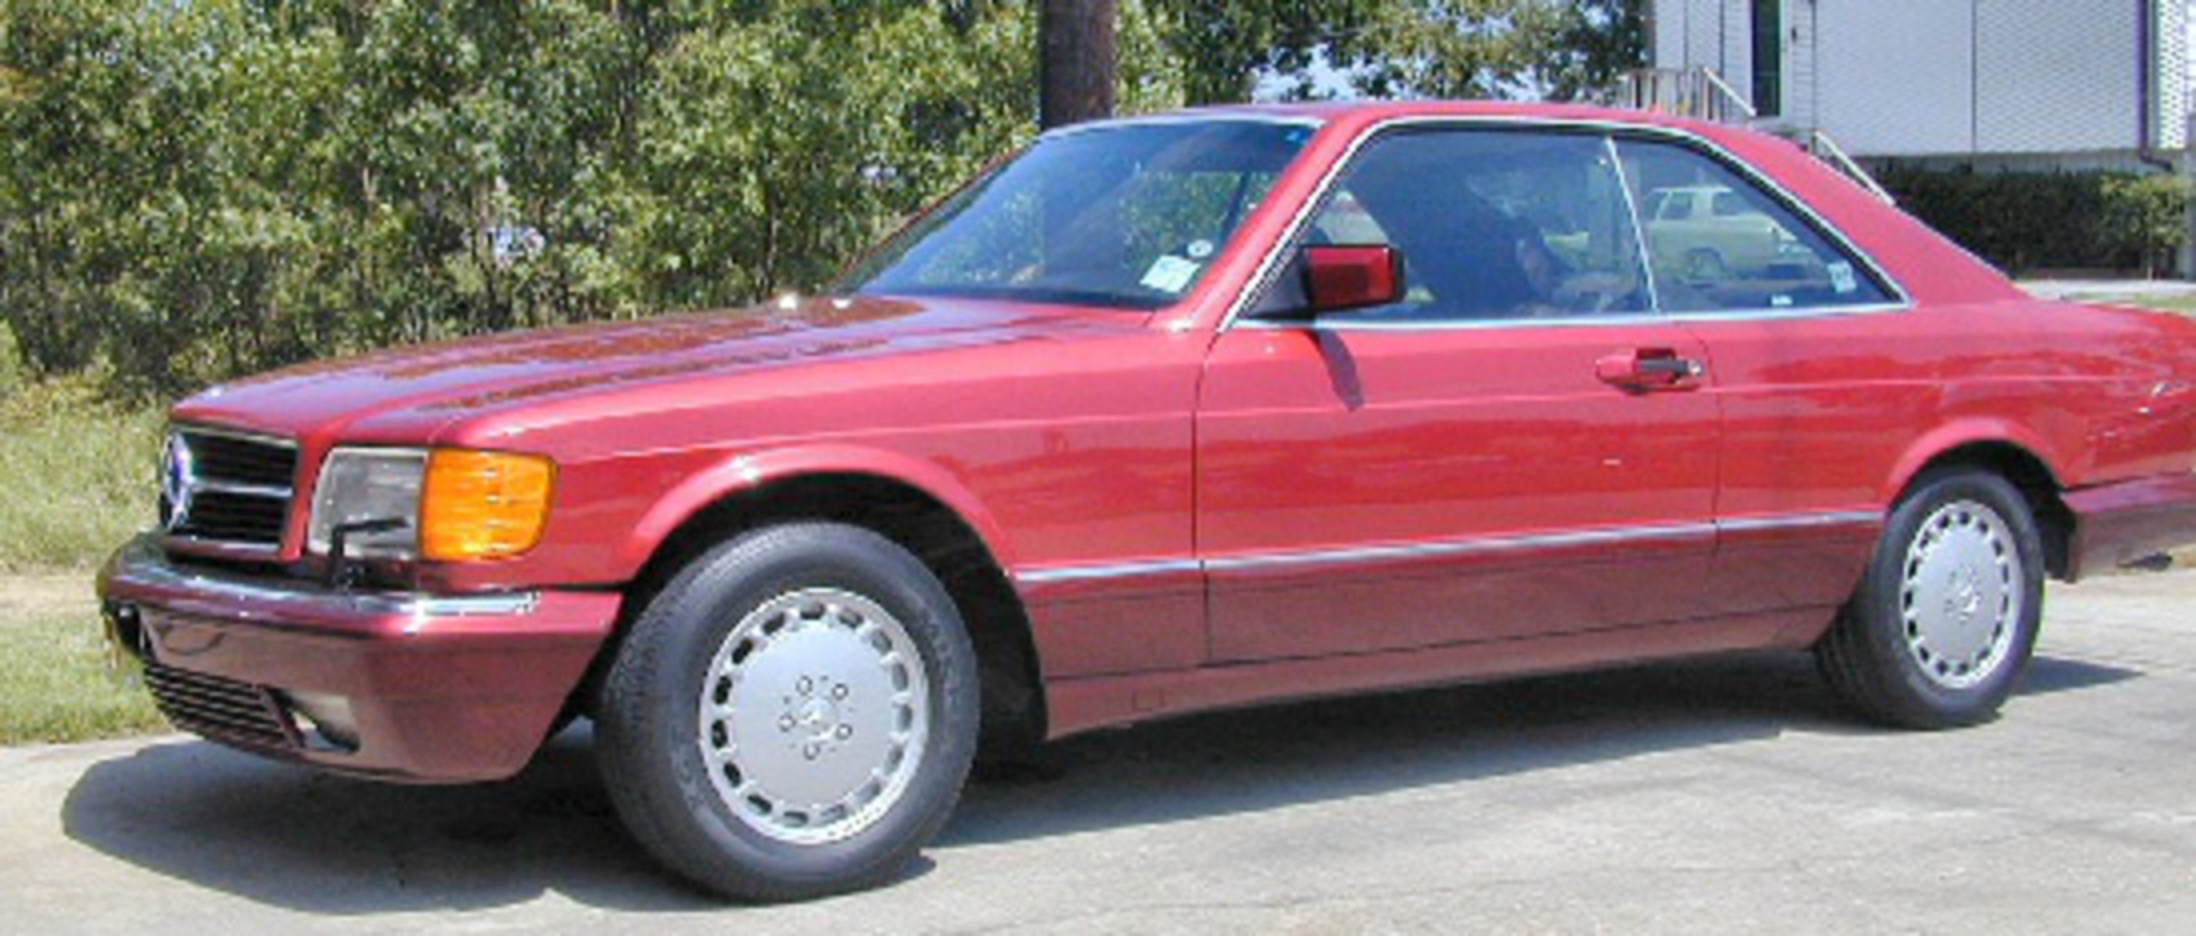 Coupé Mercedes Benz-560 SEC 1989 En excellente forme.